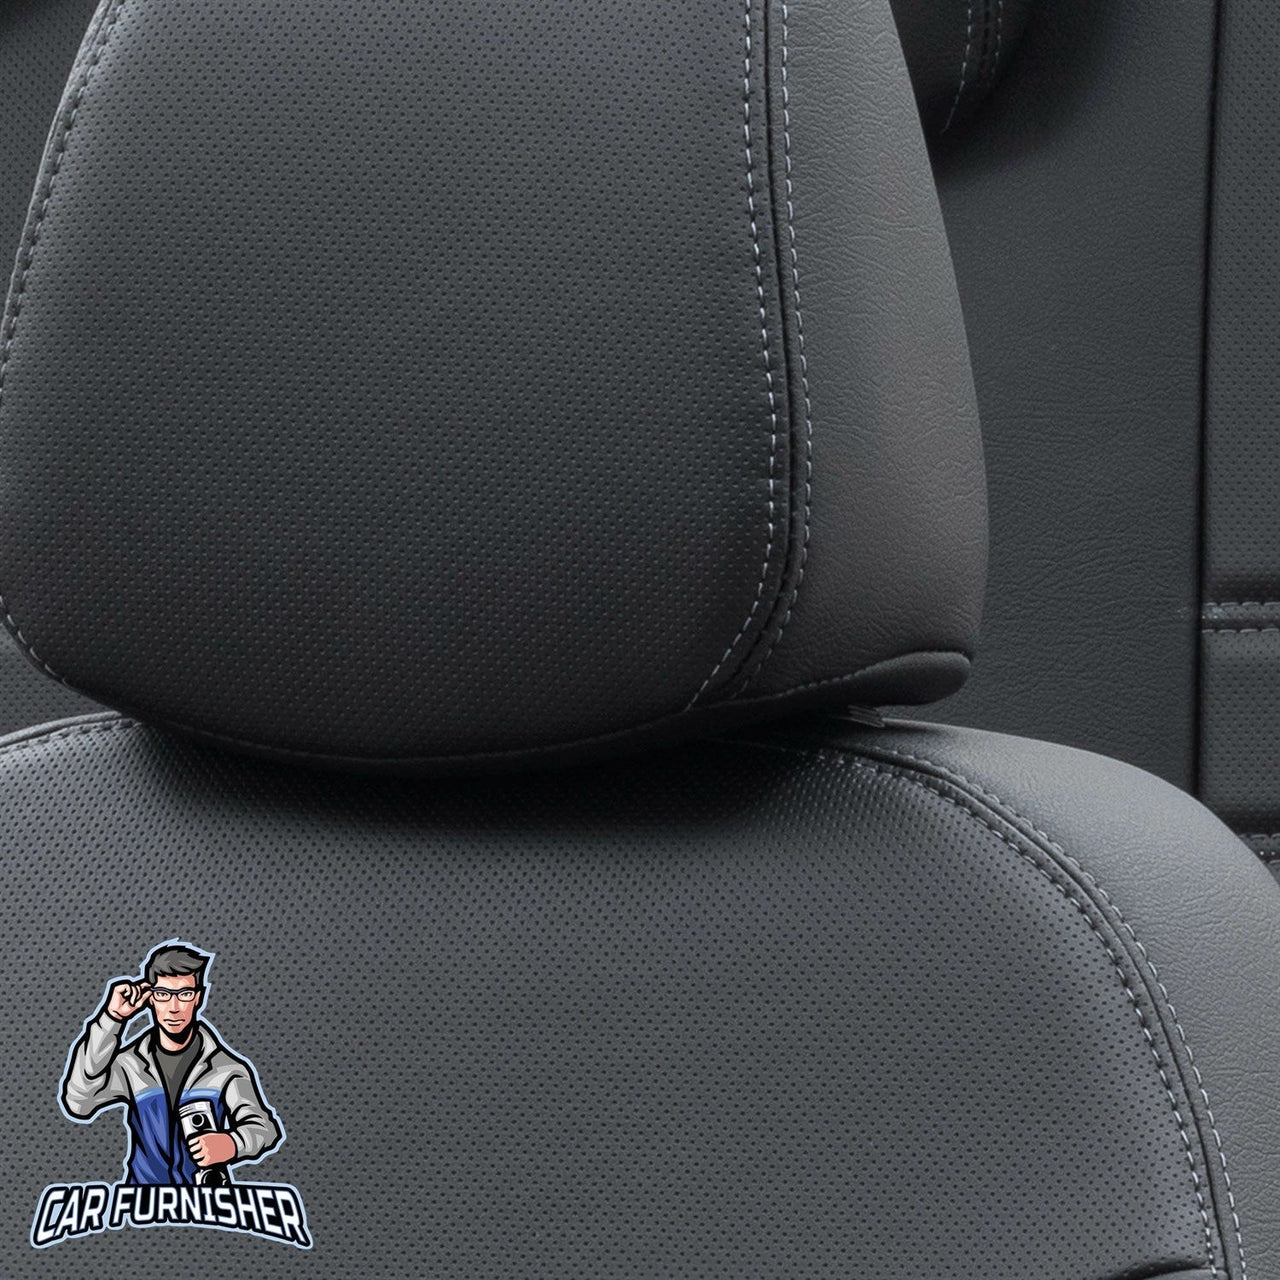 Hyundai Ioniq Seat Covers Istanbul Leather Design Black Leather